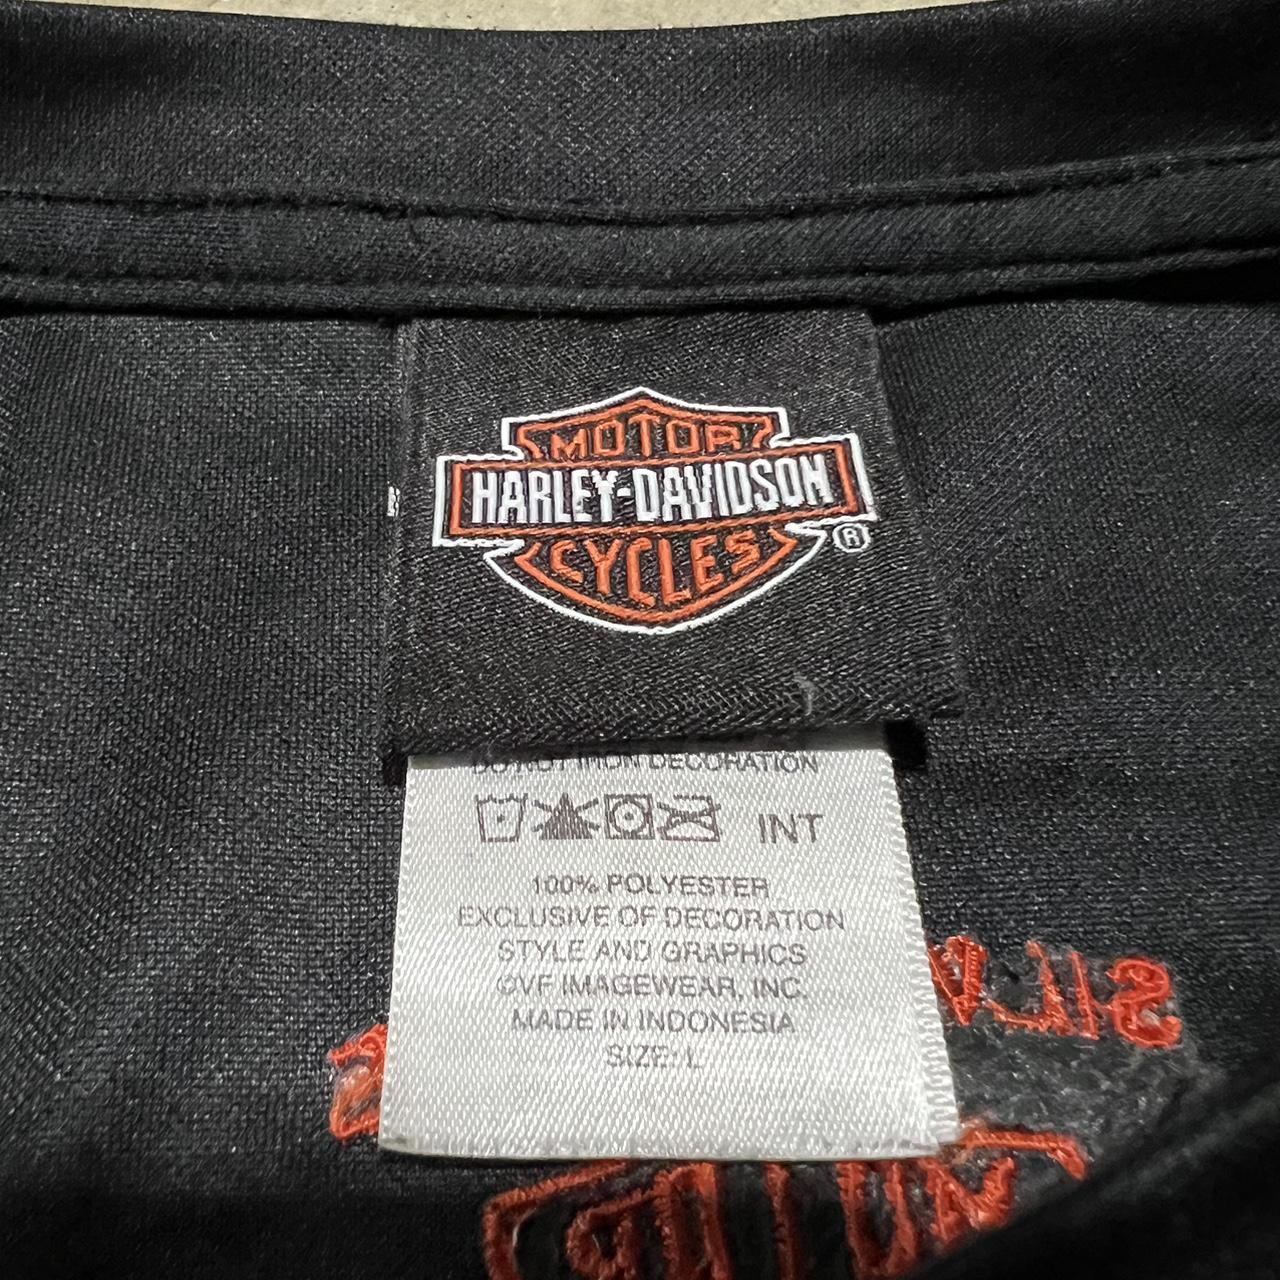 Harley Davidson Men's Black and Orange T-shirt (3)